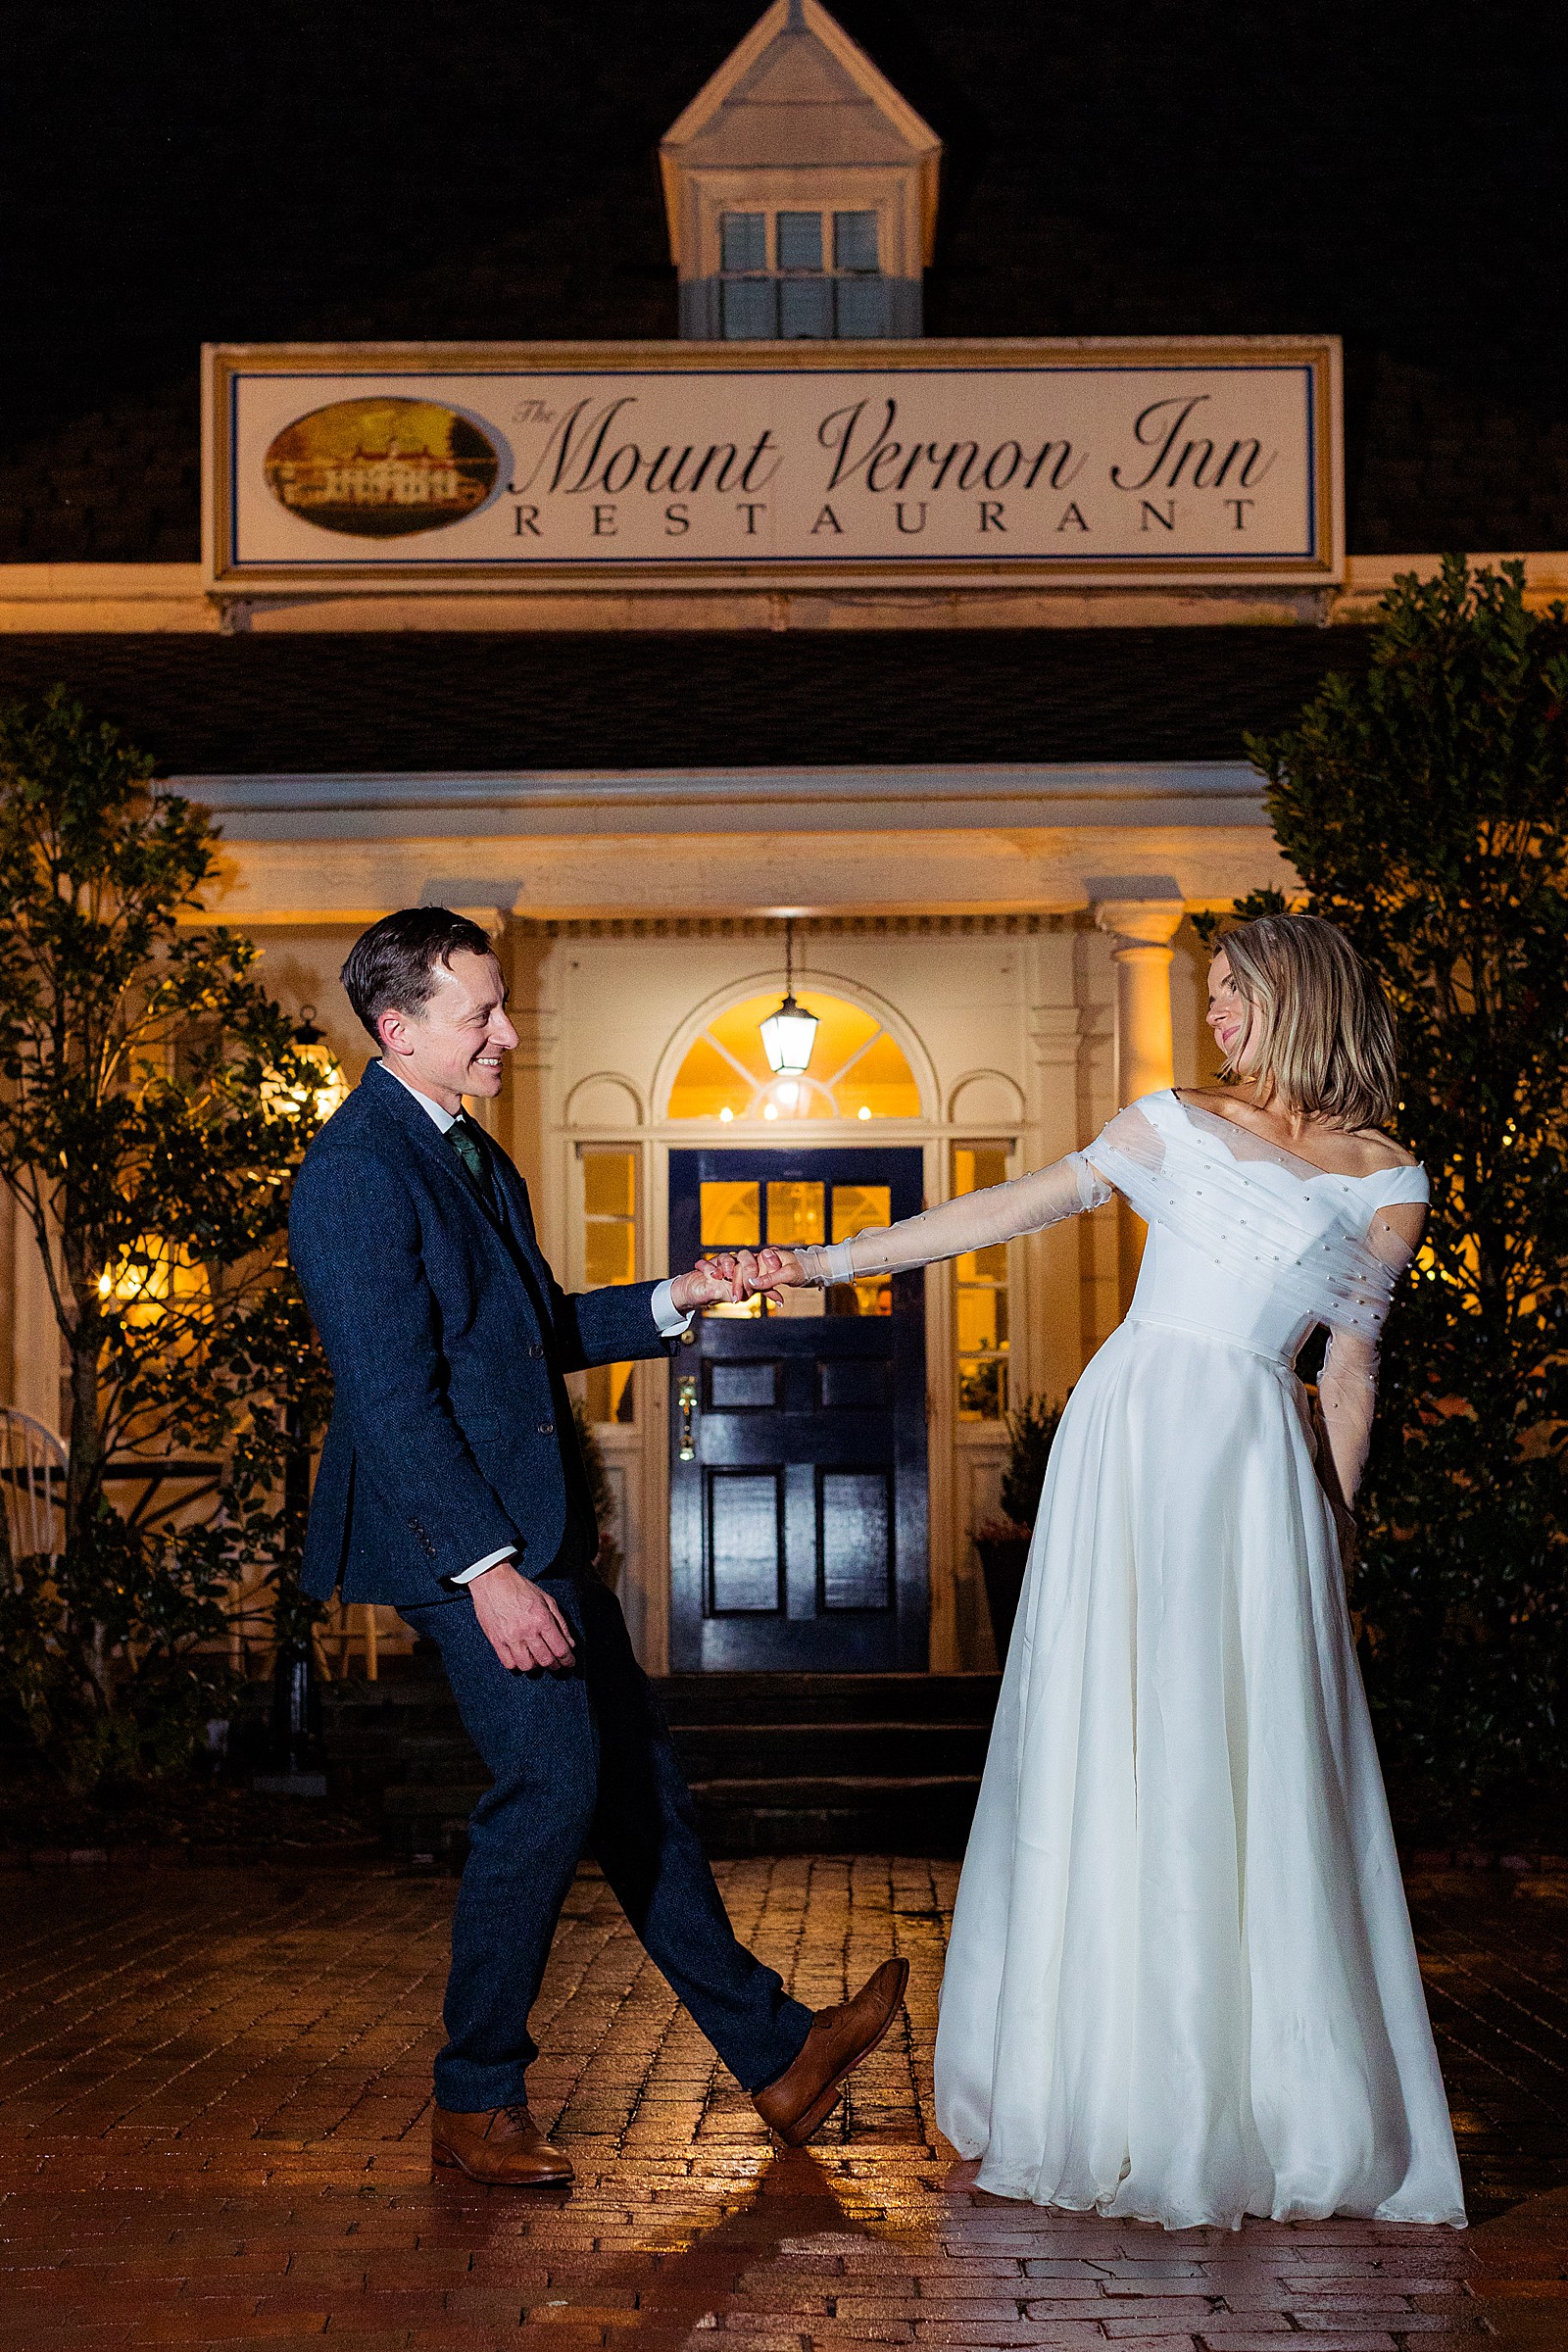 Bride and groom do a little outdoor dancing at their rainy Mount Vernon Inn Restaurant wedding.